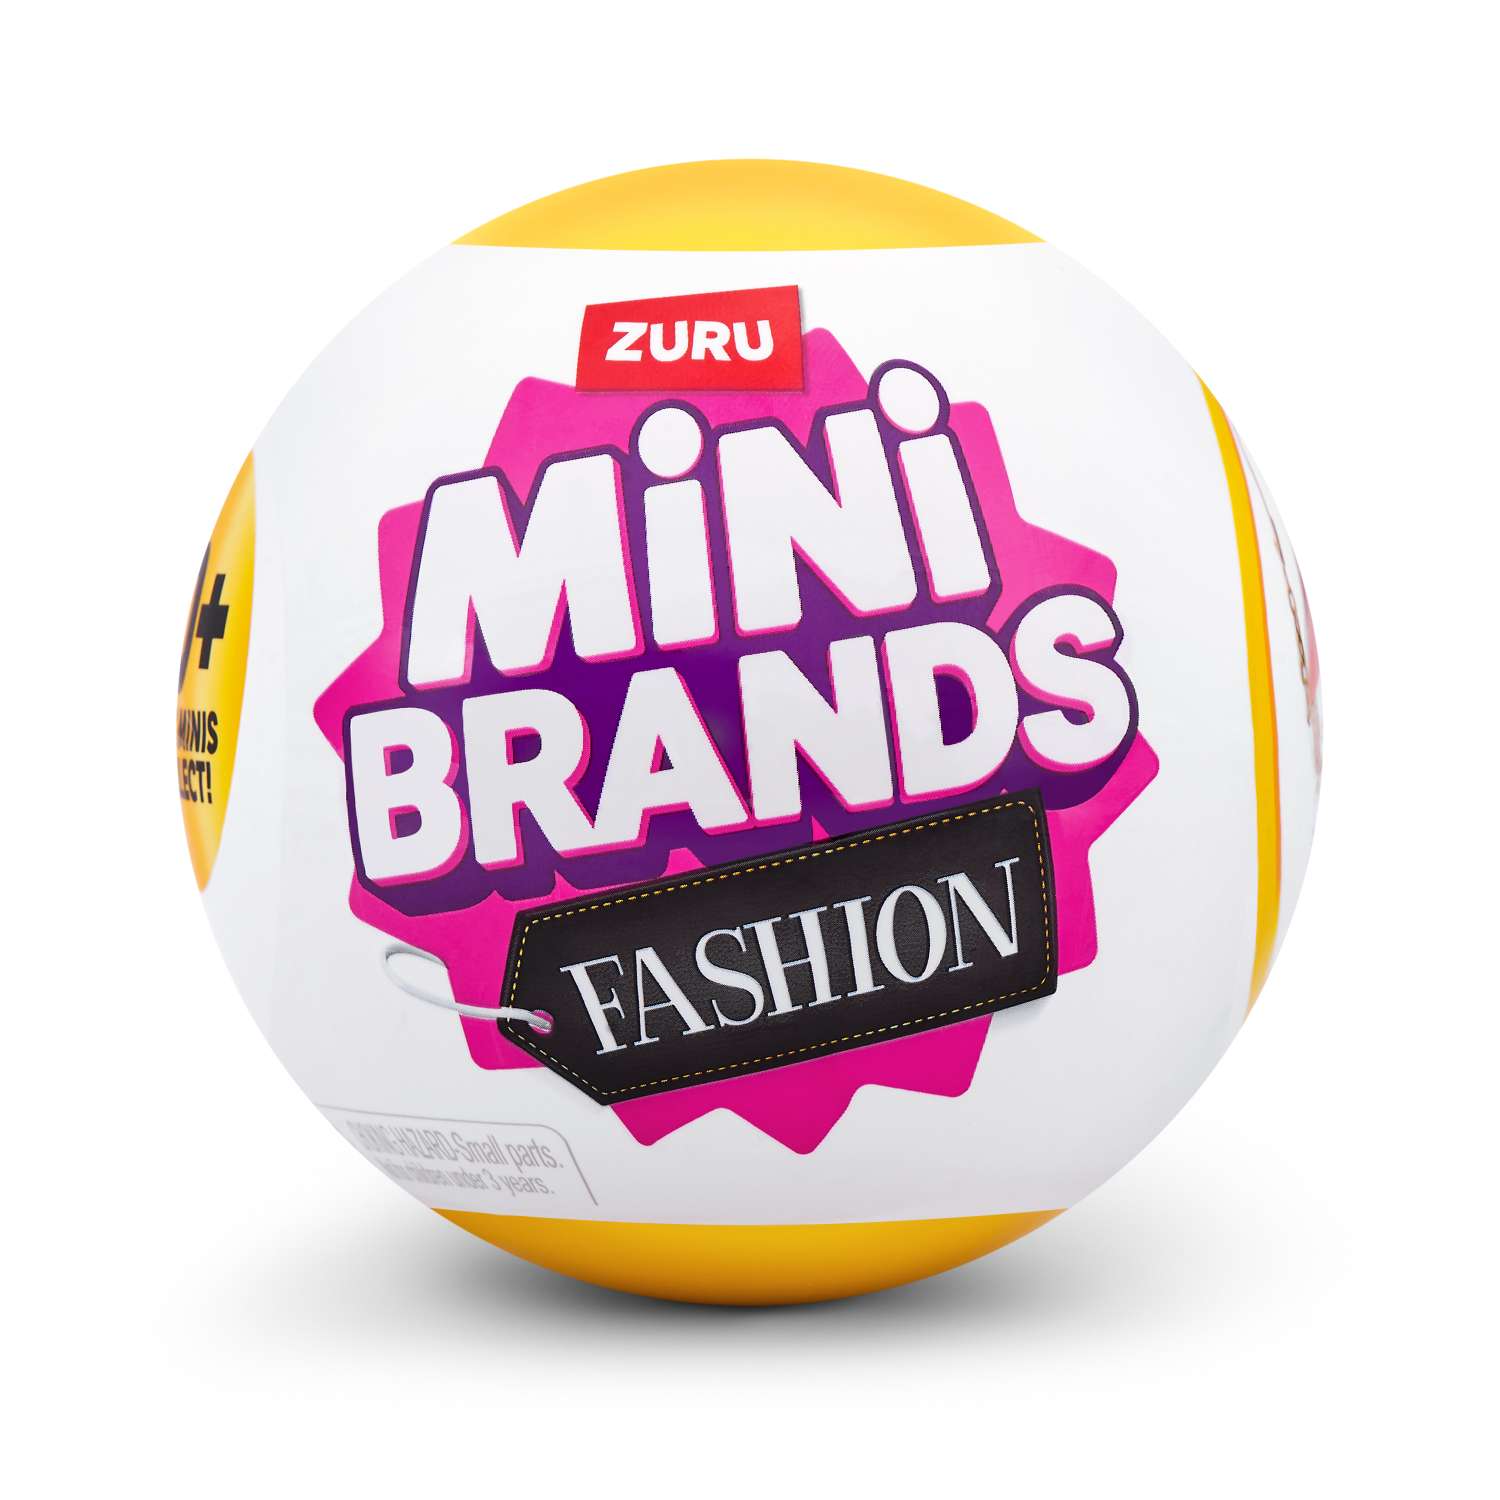 Игрушка Mini brands Fashion Шар в непрозрачной упаковке (Сюрприз) 77485GQ3 - фото 1